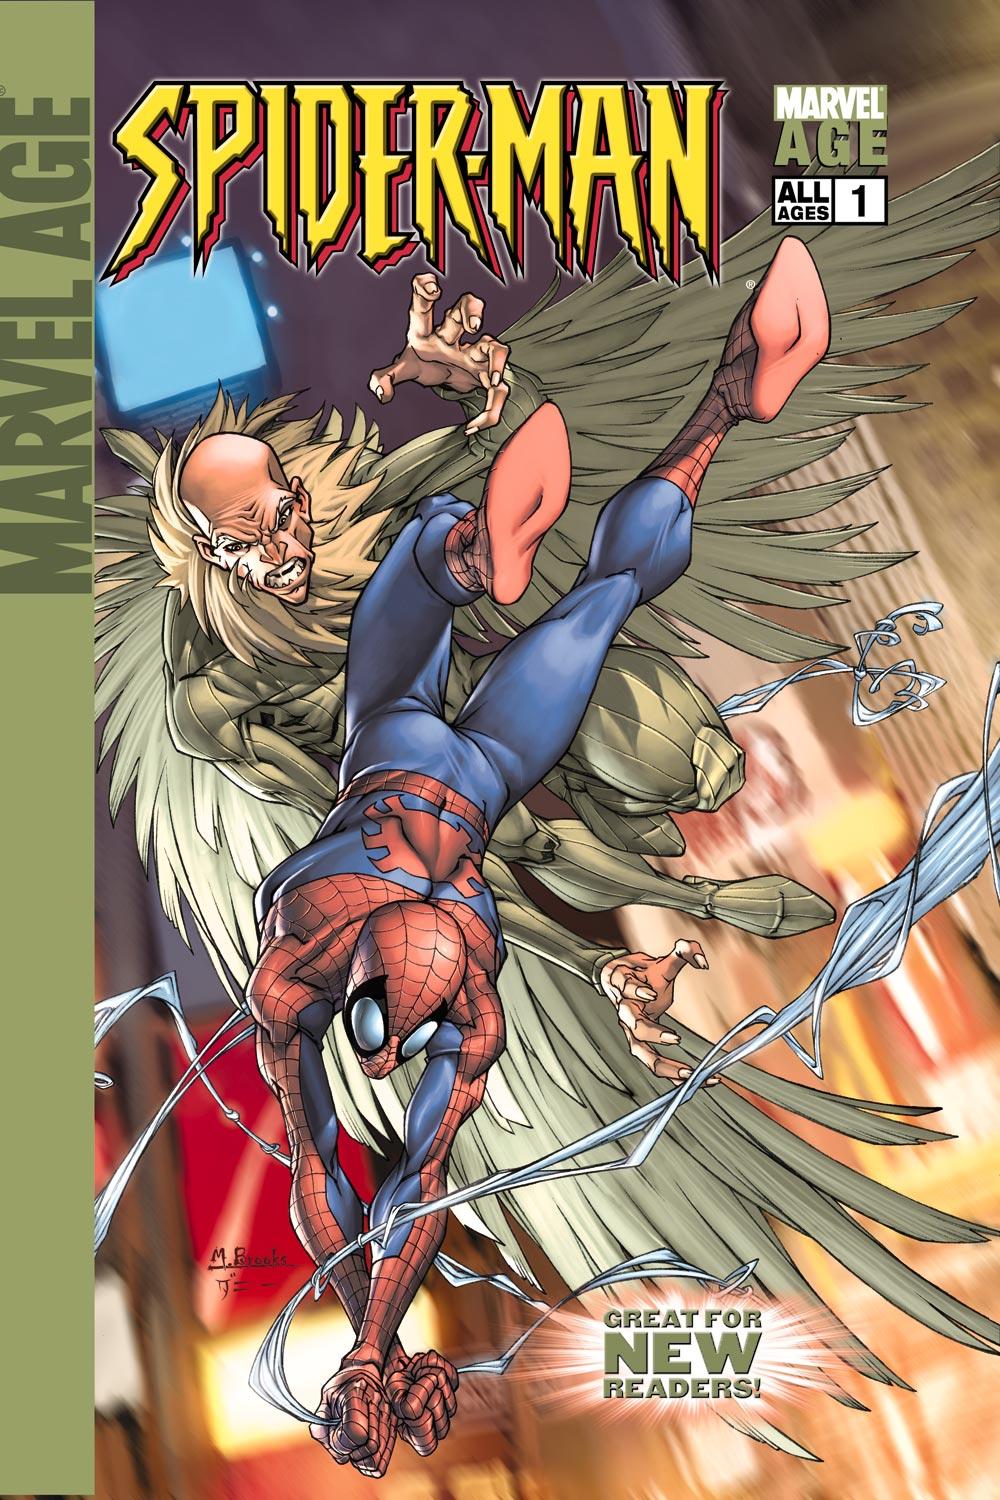 Marvel age spider man